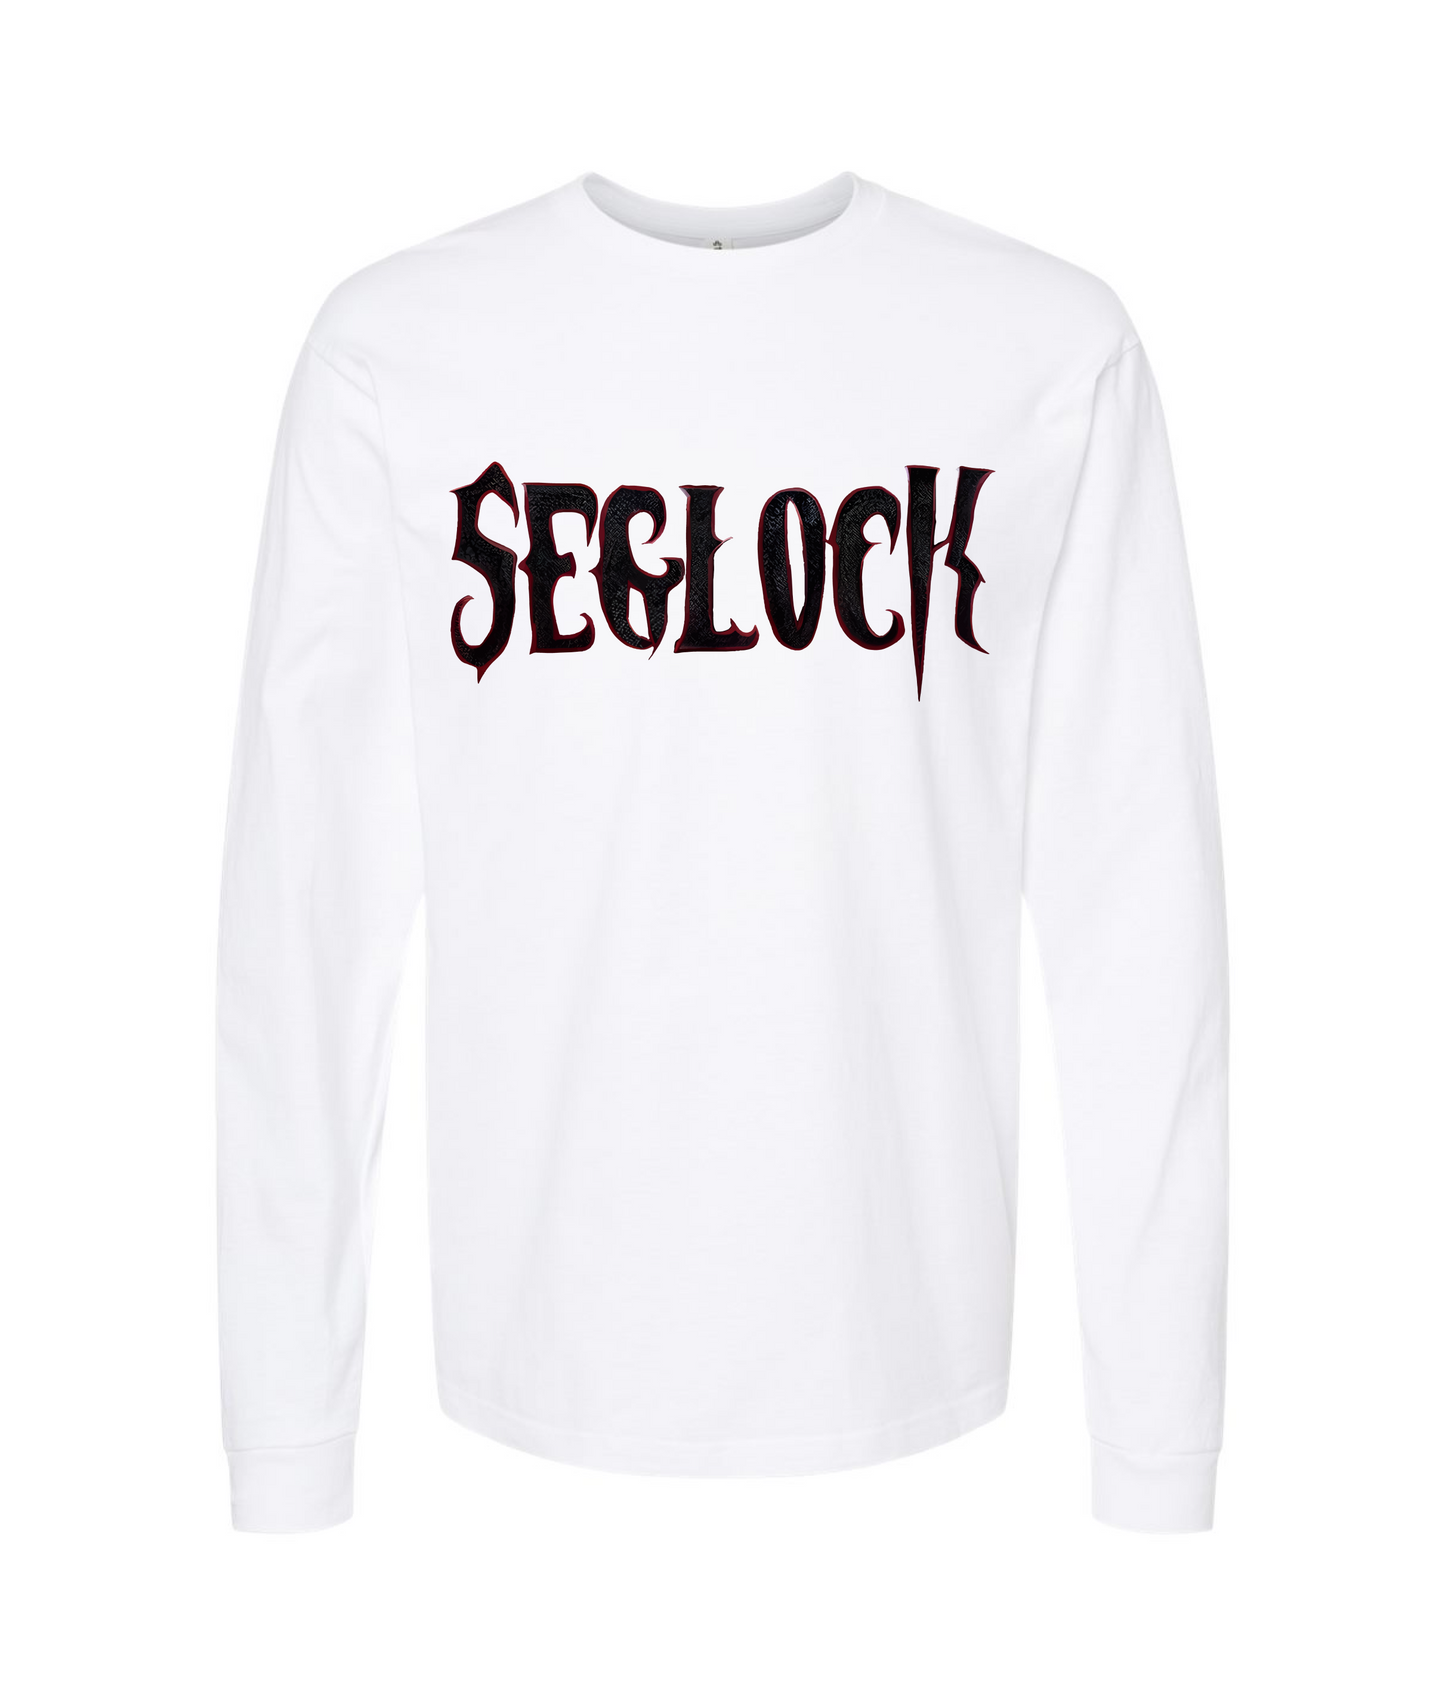 Seglock - QUAD - White Long Sleeve T